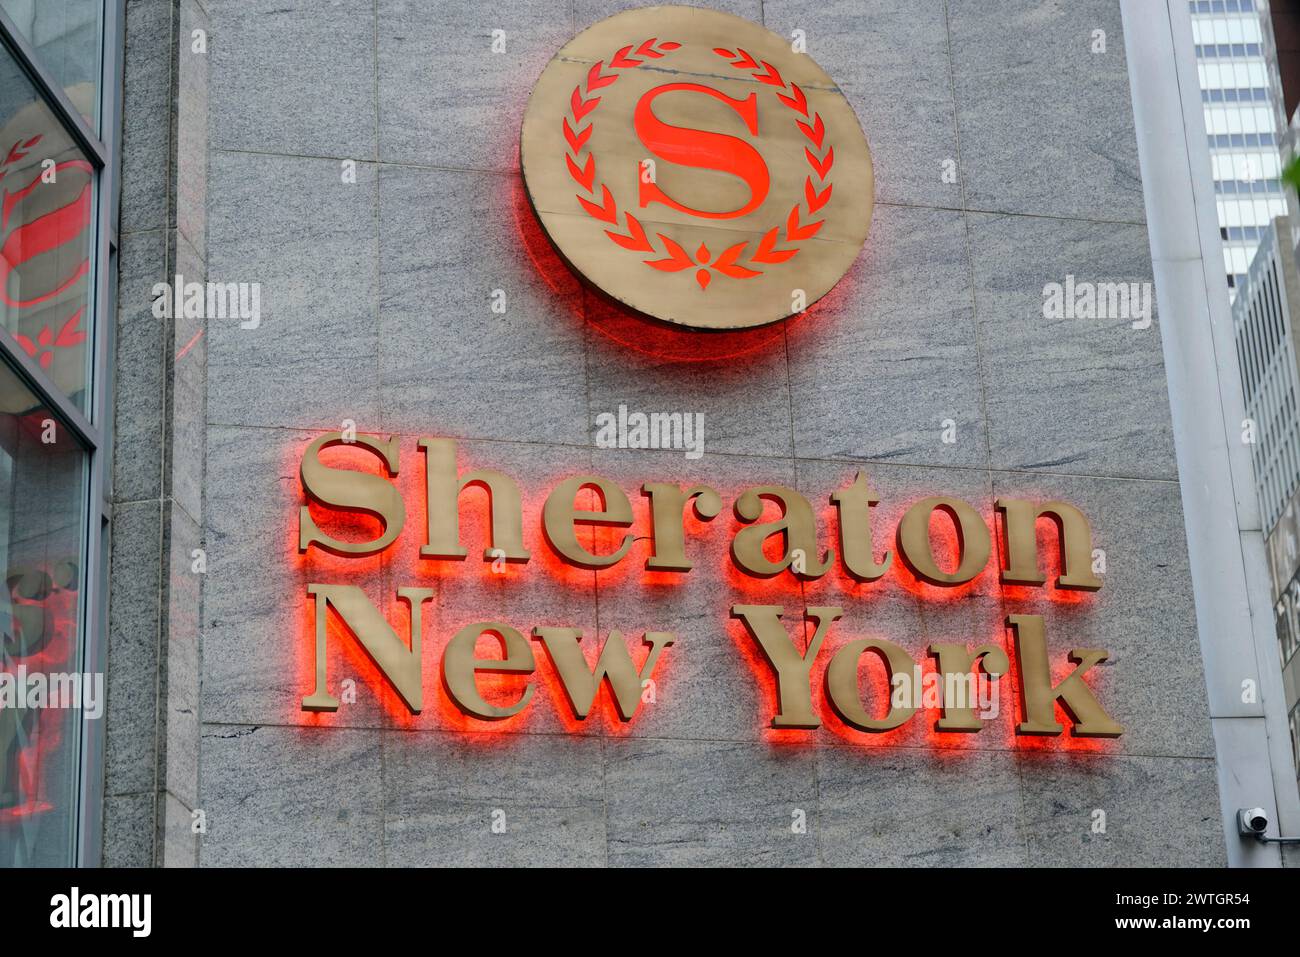 The glowing neon sign 'Sheraton New York' on a building facade, Manhattan, New York City, New York, USA, North America Stock Photo